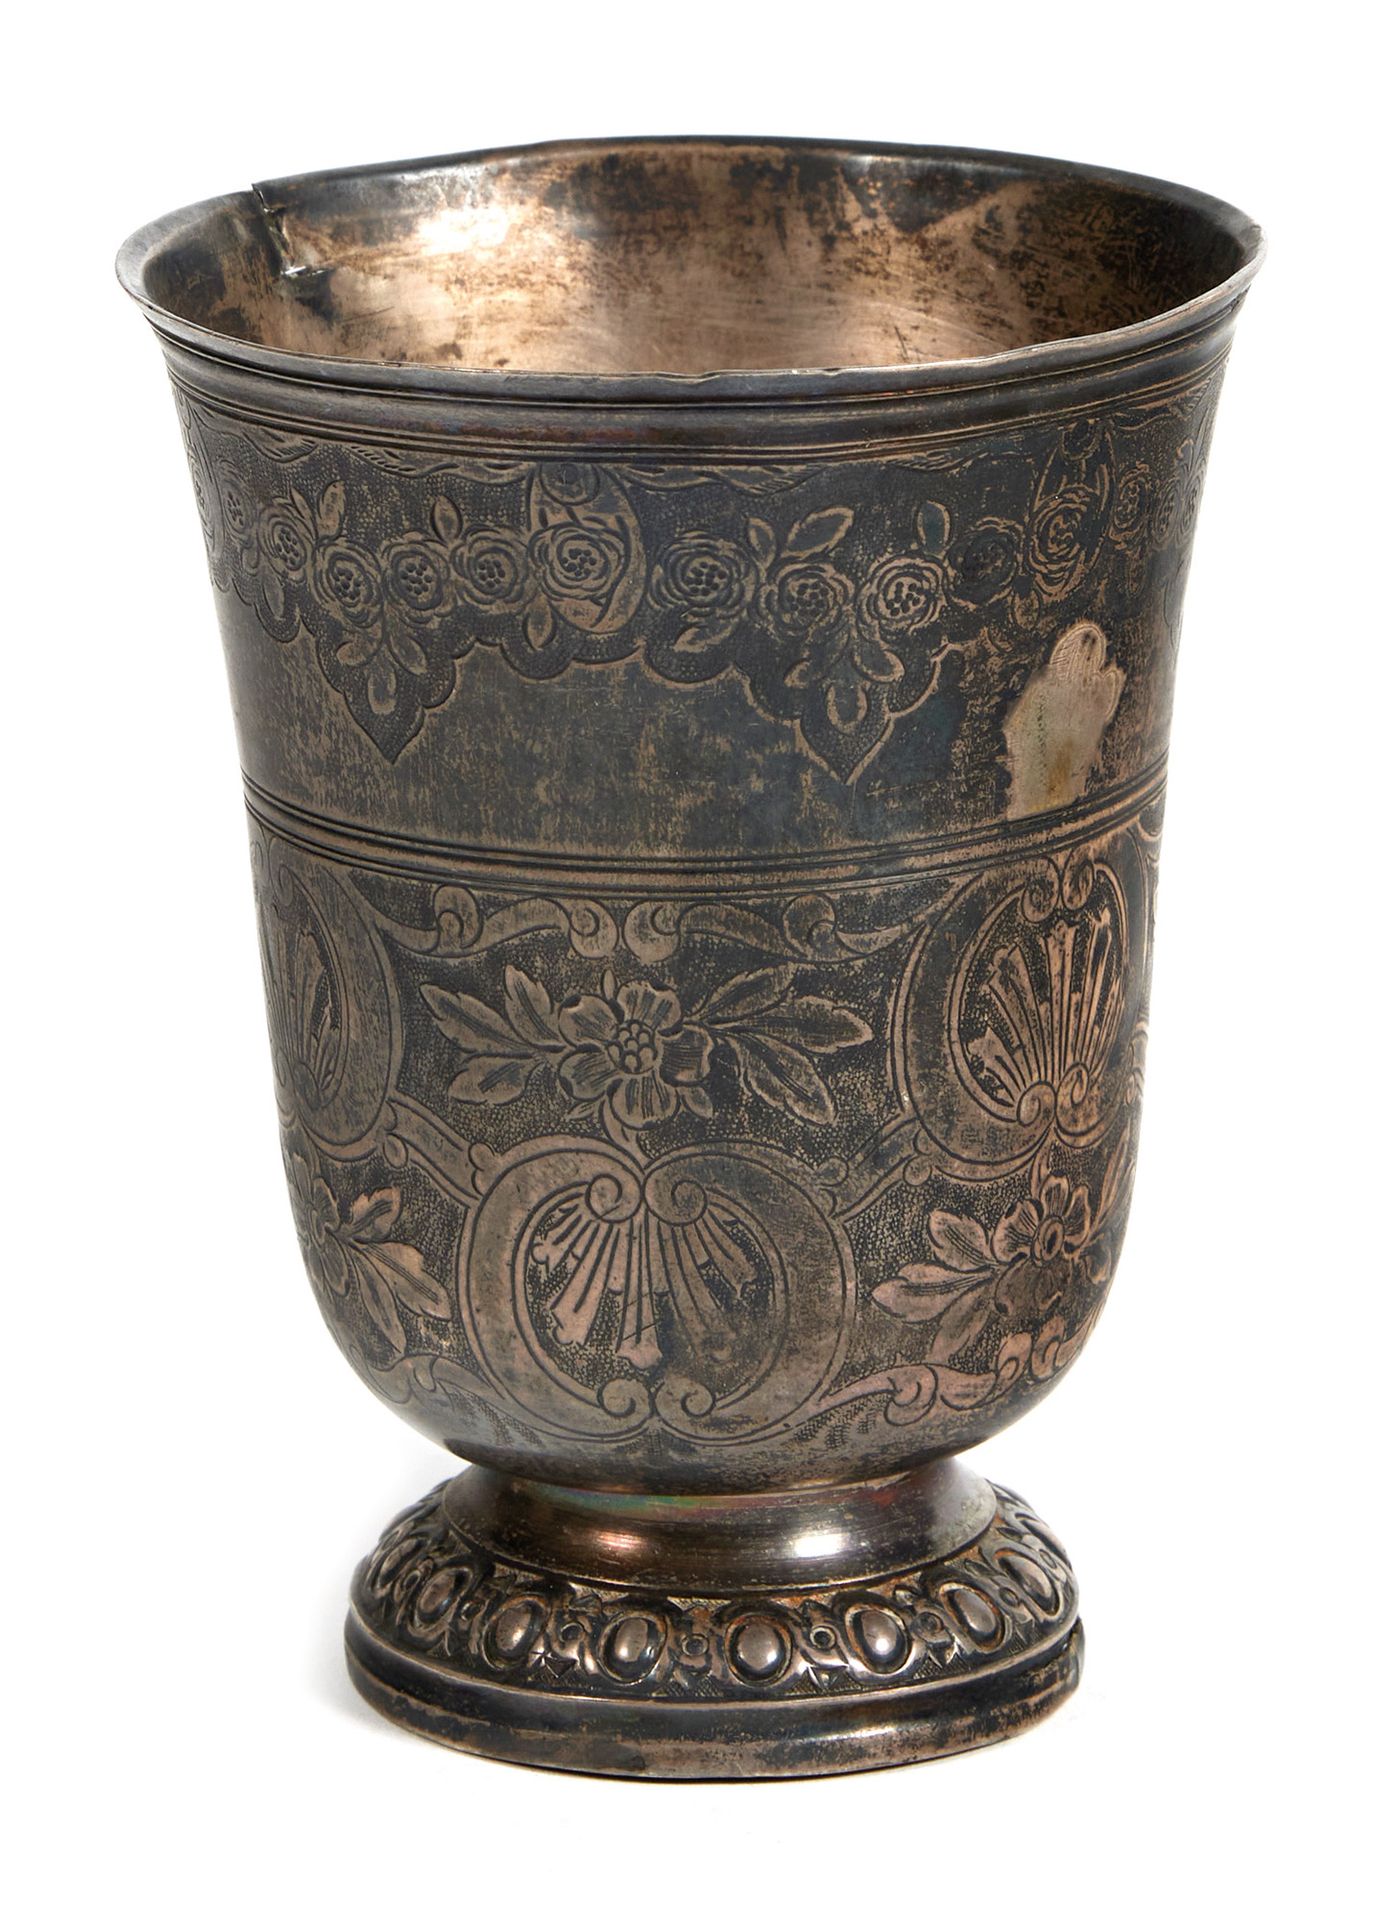 TIMBALE TULIPE EN ARGENT Tulpenförmige Timbale aus Silber.

Paris, 1750, Meister&hellip;